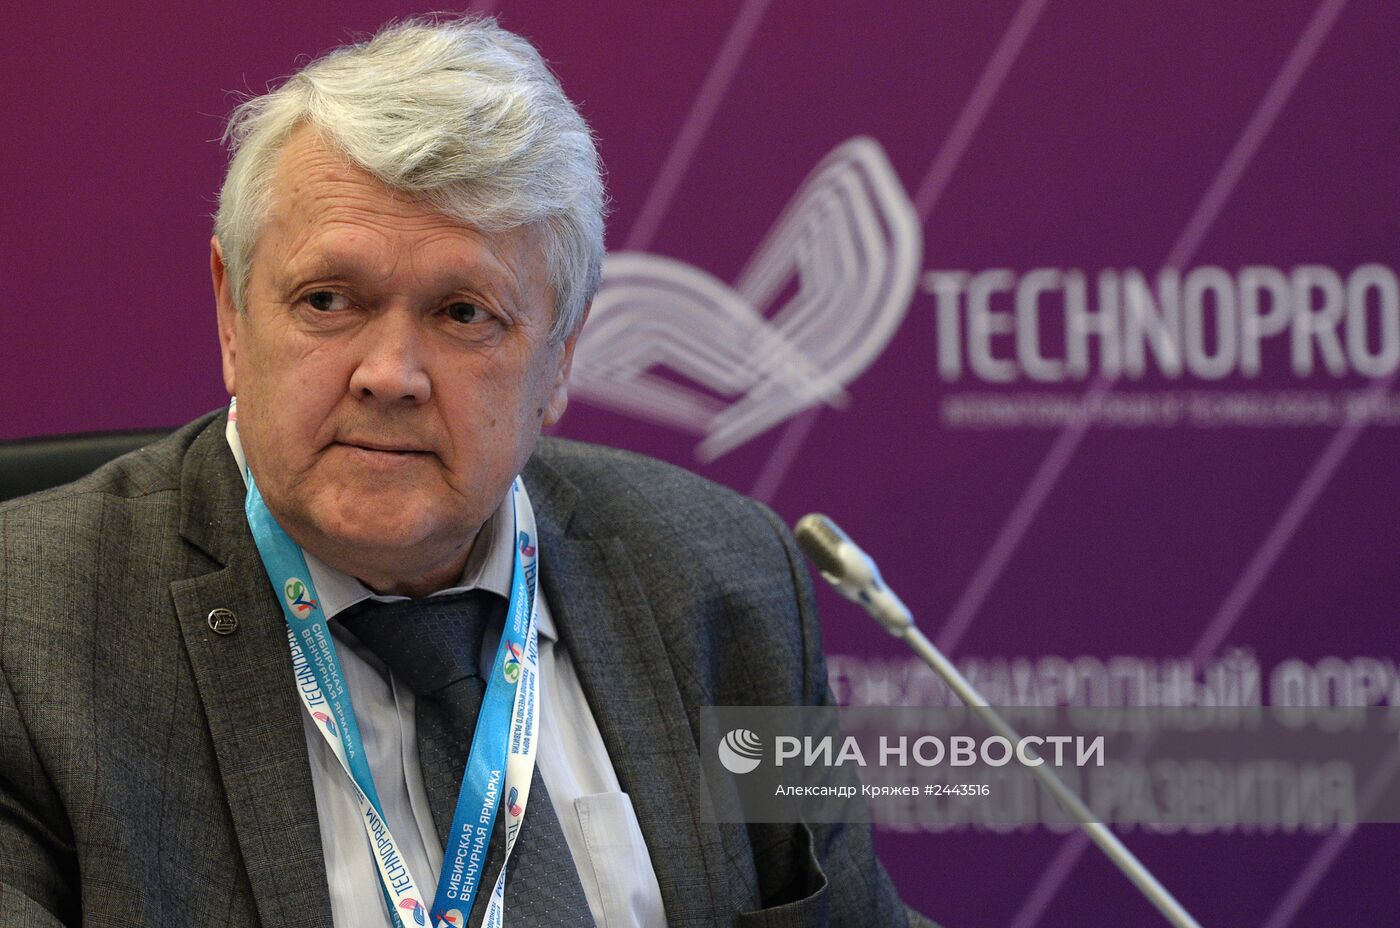 II Международный форум "Технопром"